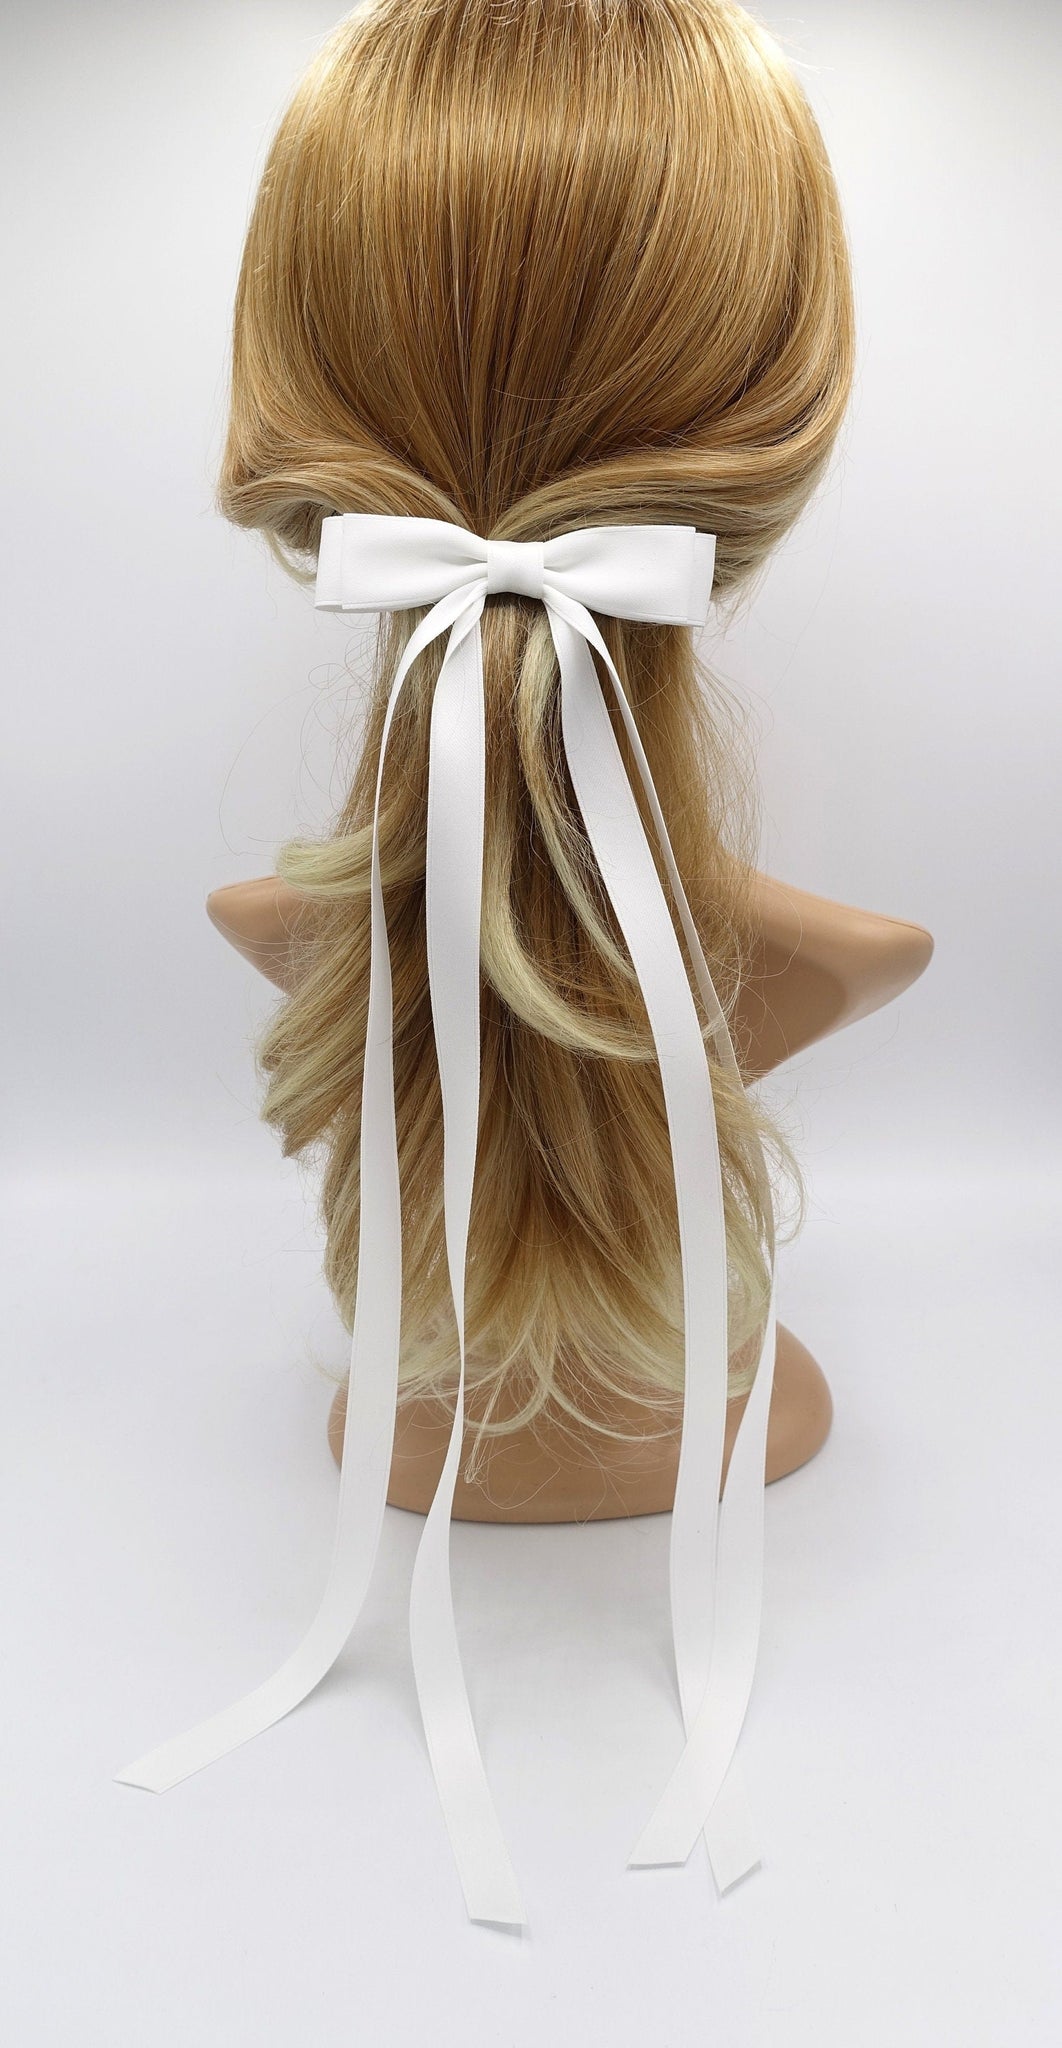 veryshine.com Barrette (Bow) White satin hair bow, extra long hair bow for women